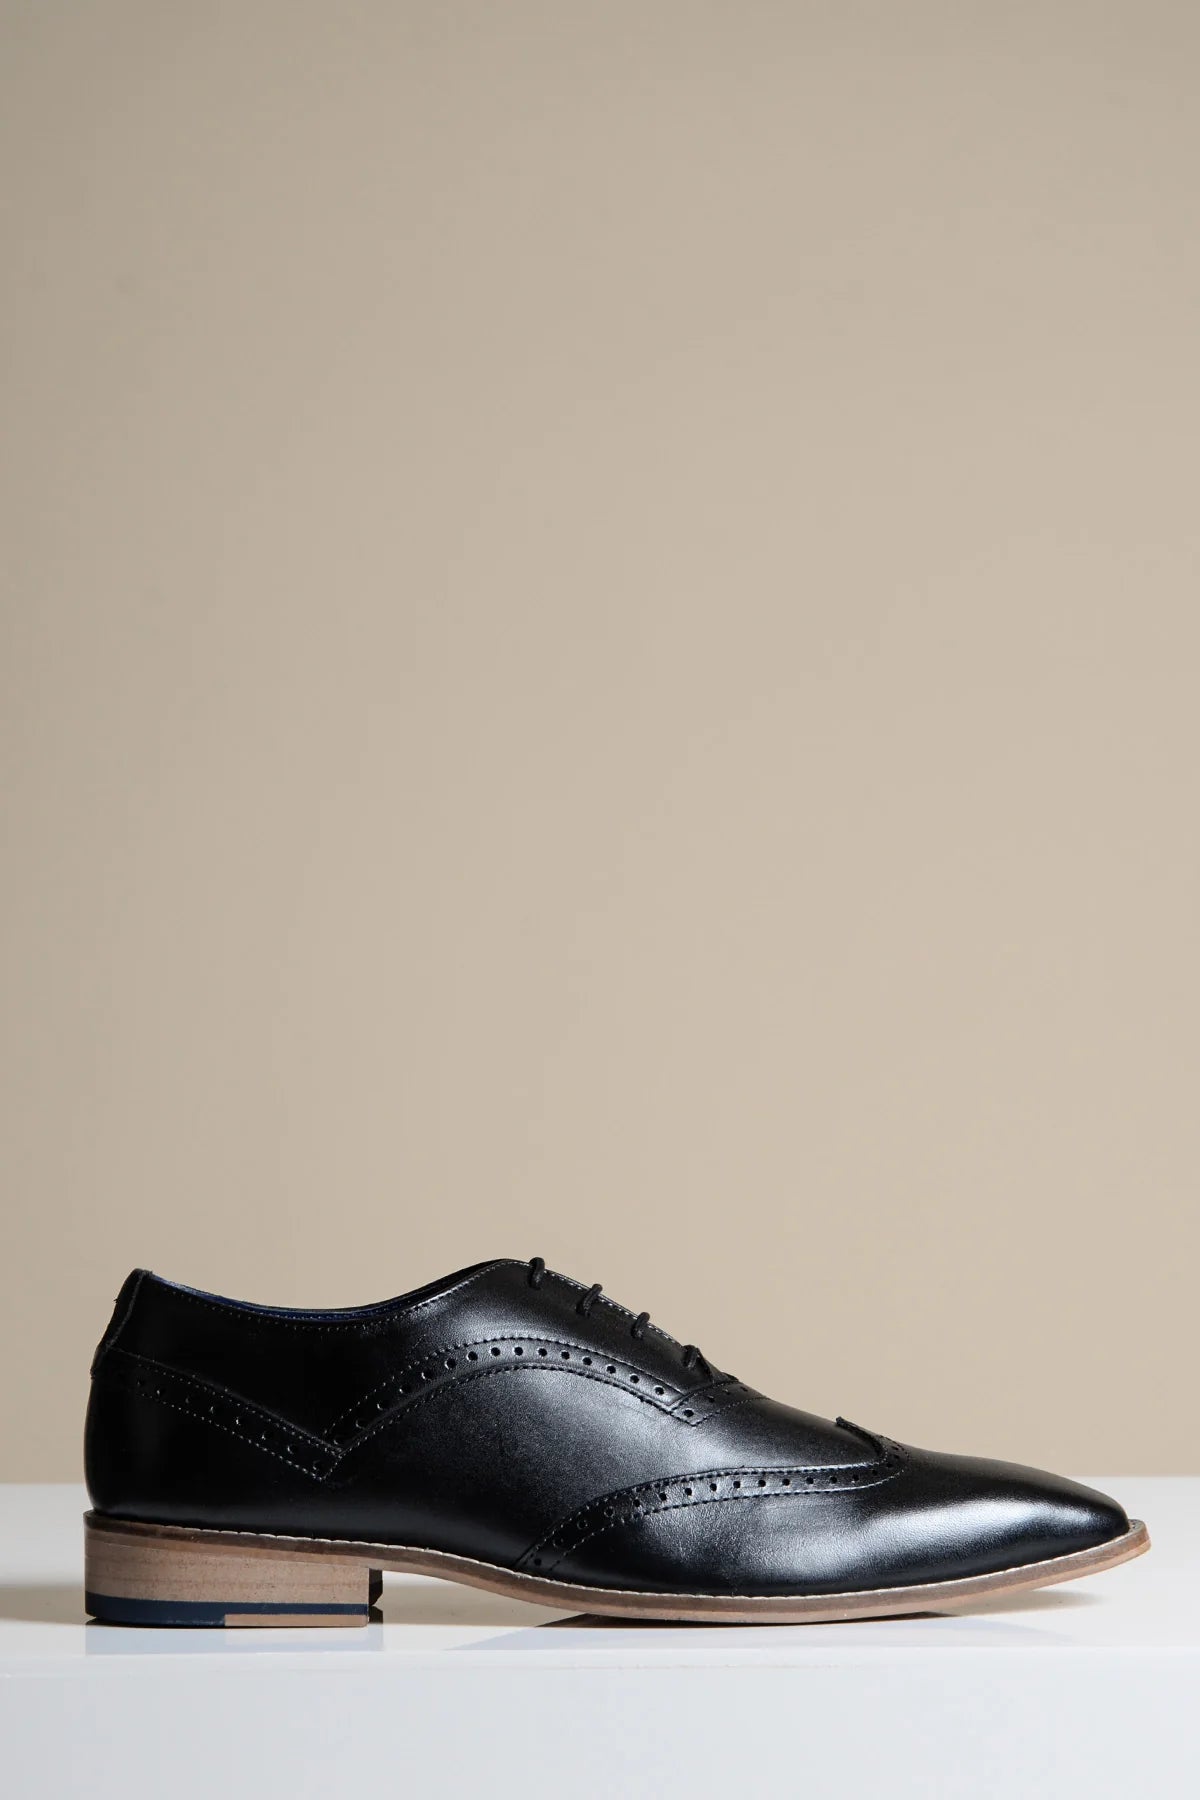 Chaussures en cuir noir Marc Darcy Dawson - Wingtip brogue